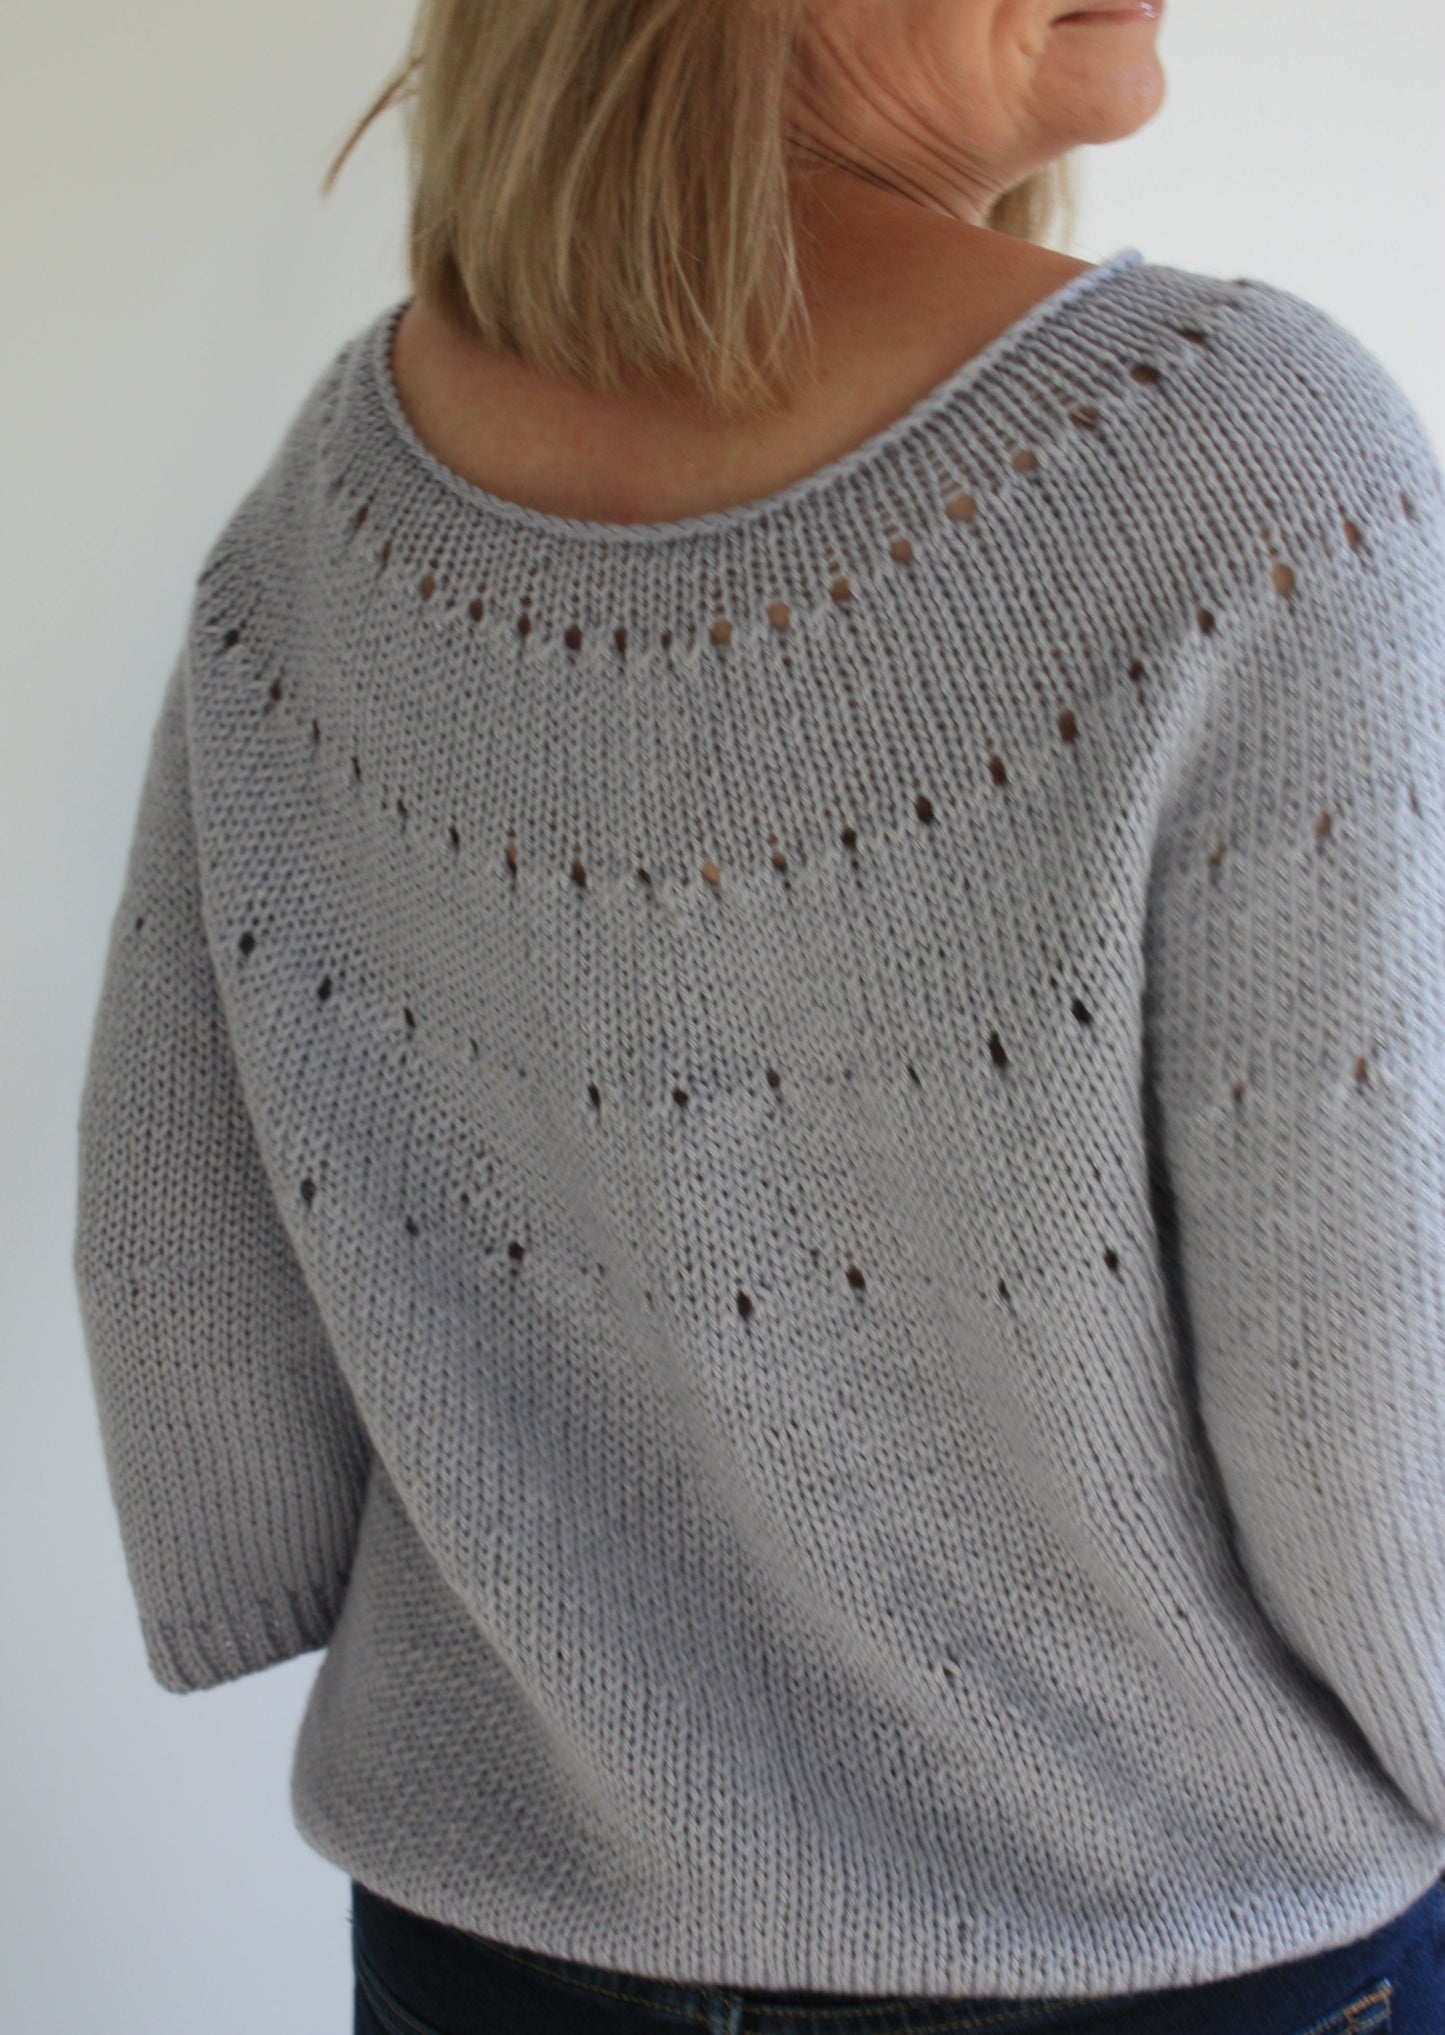 Easy Sweater Knitting Pattern - La Monnaie Blouse - King & Eye